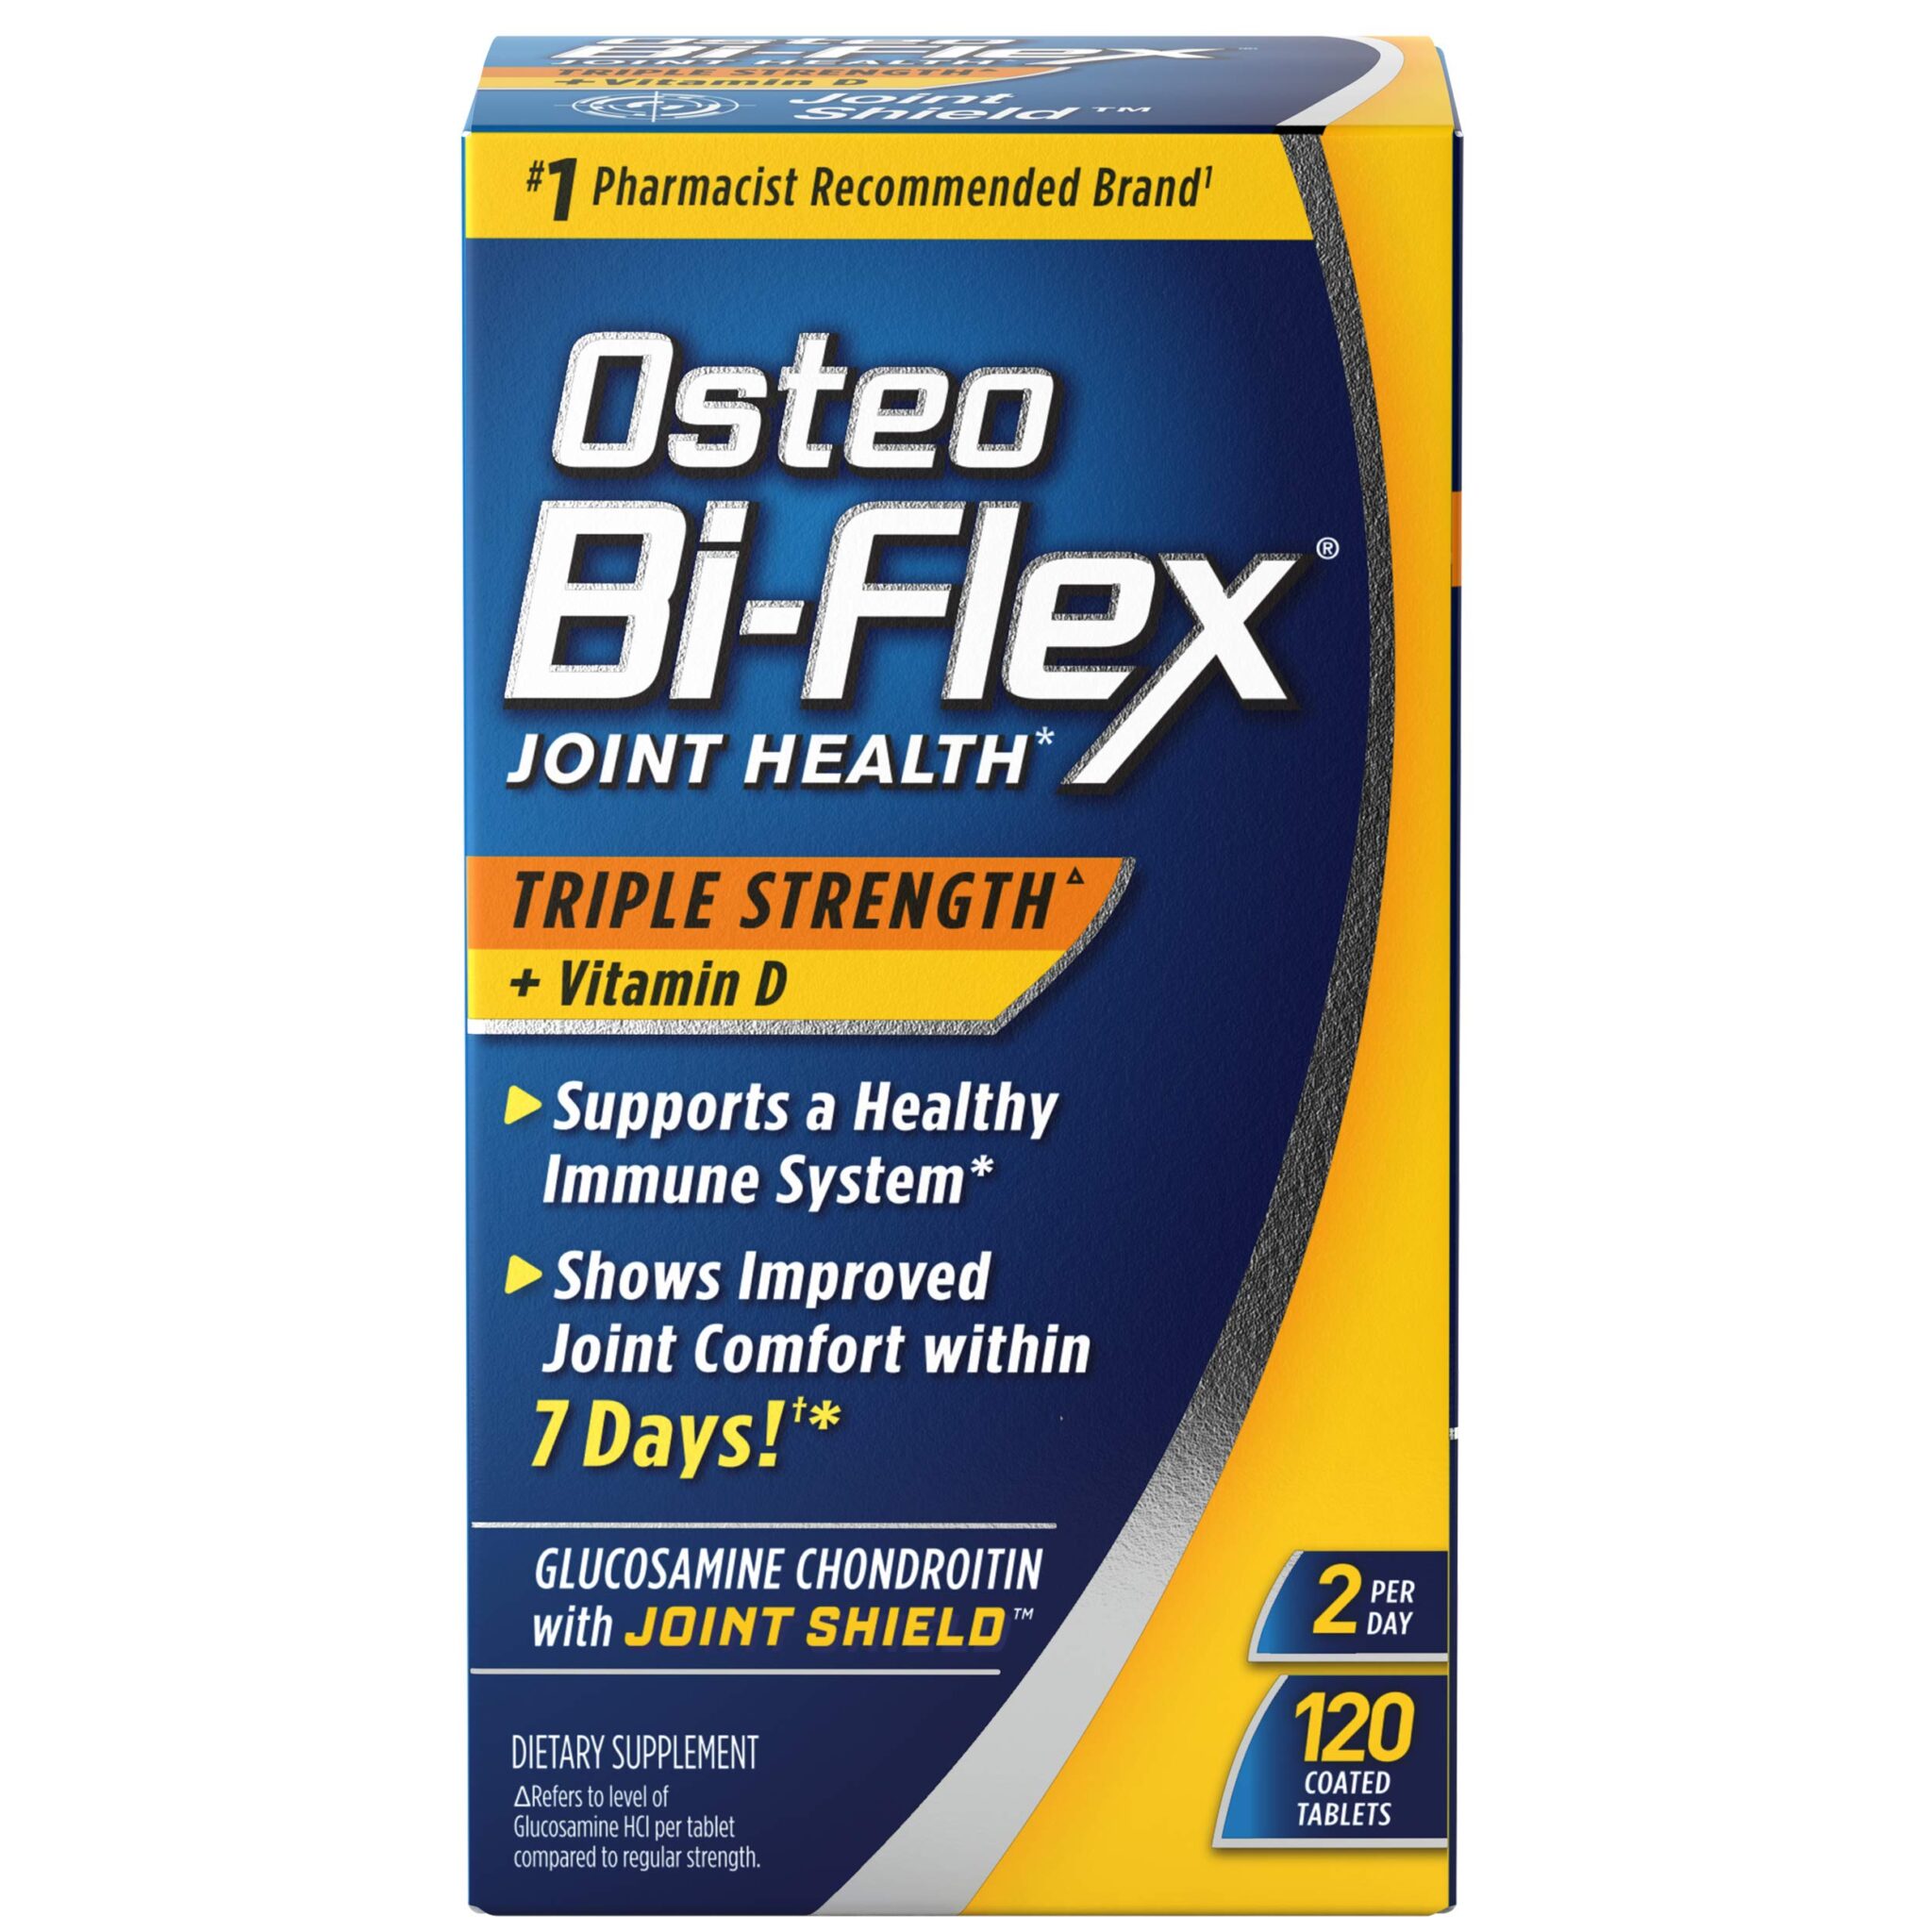 Osteo Bi-Flex